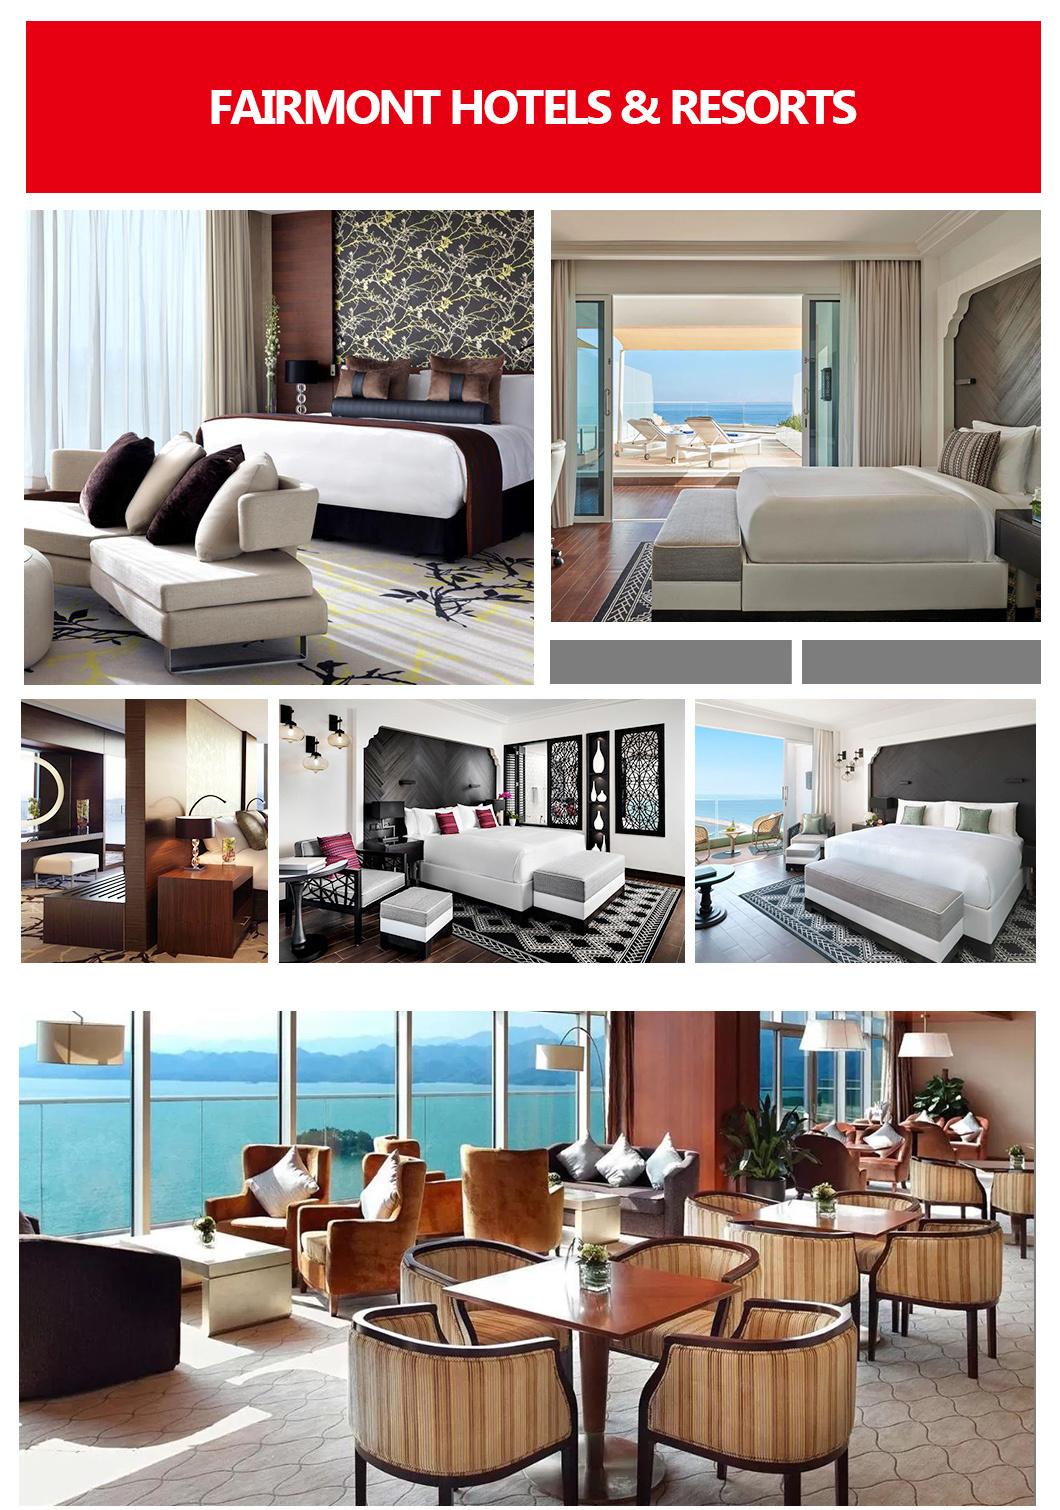 Custom Made 5 Star Luxury Modern Hospitality 3 Bed Hotel Bedroom Furniture Set